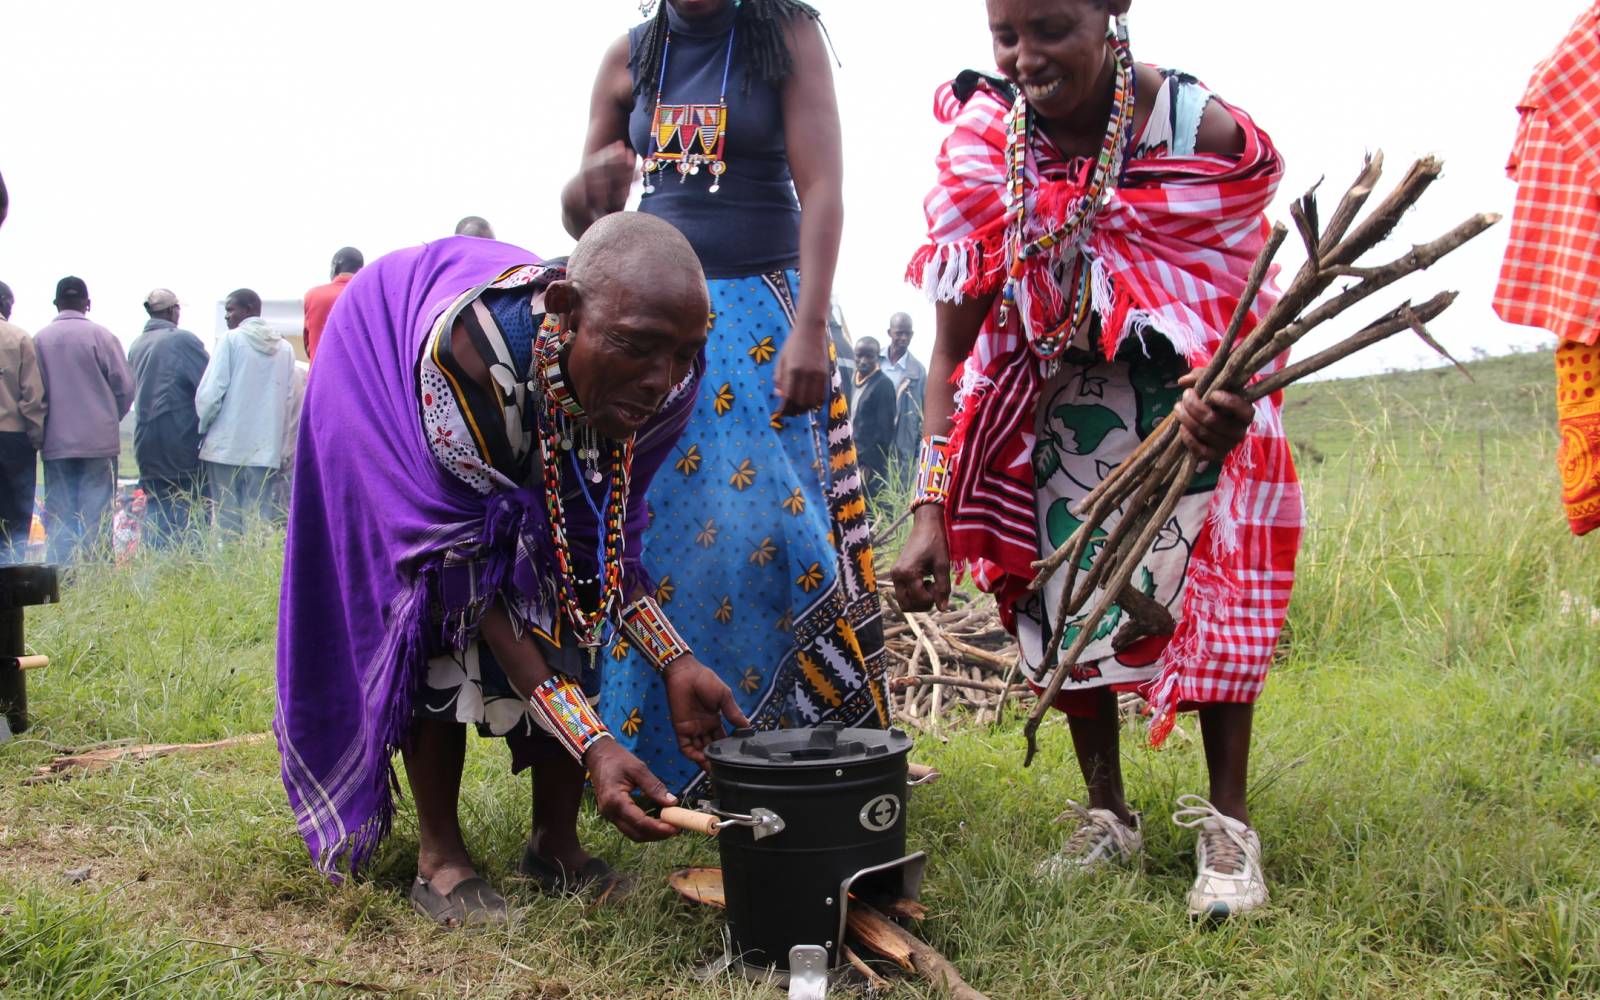 gli abitanti del Kenya testare la stufa a legna, Naivasha in Kenya